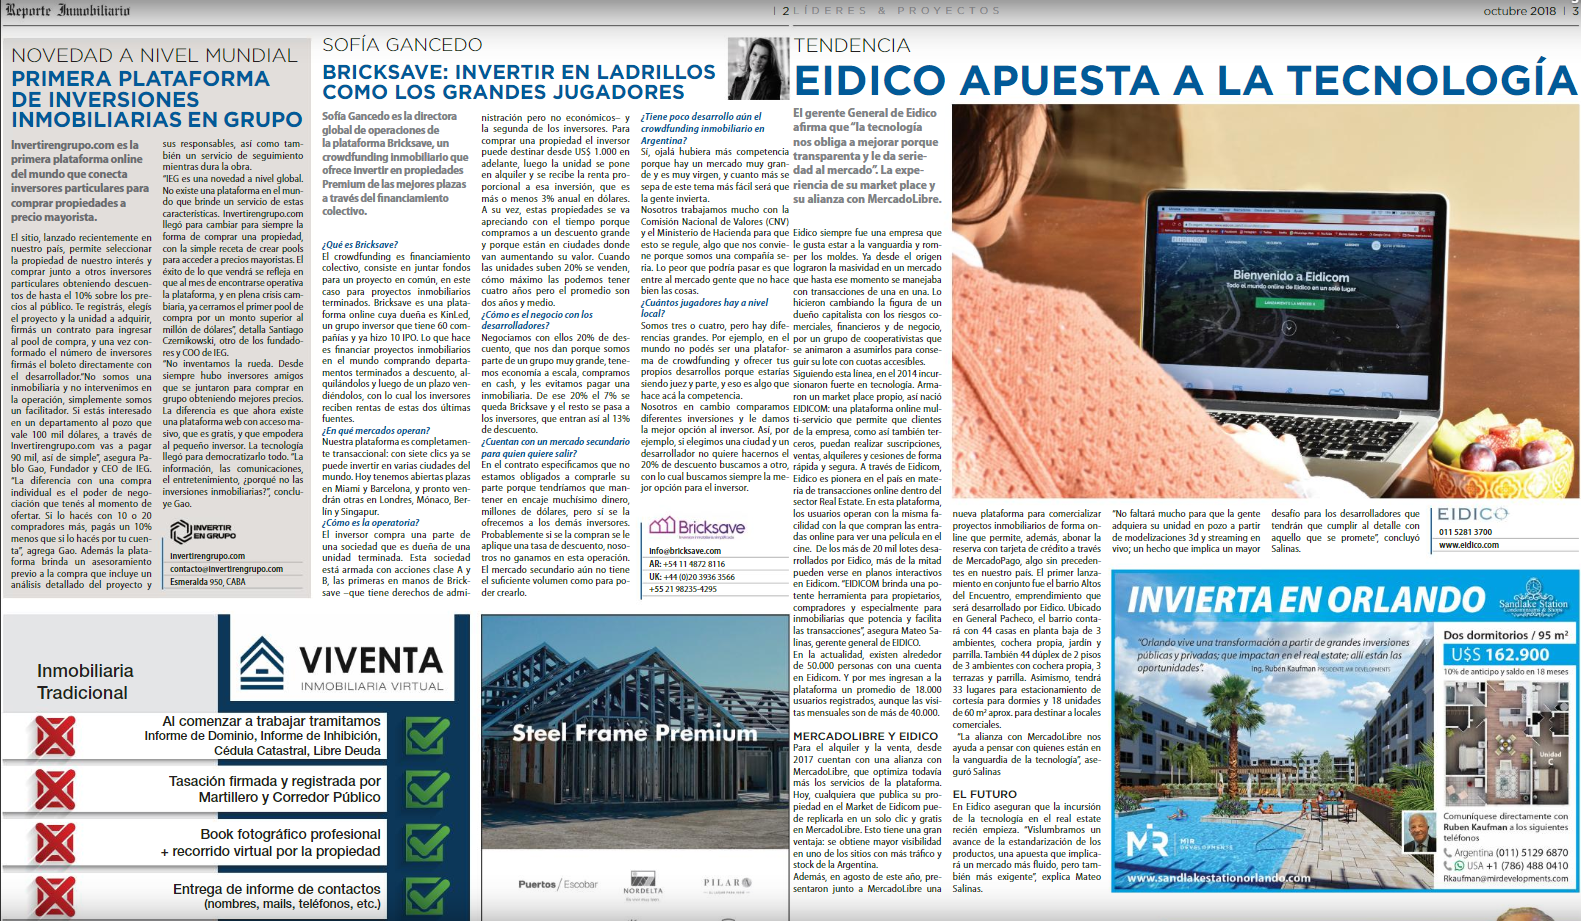 On the 18th of October Sofia Gancedo featured in Reporte Inmobiliario